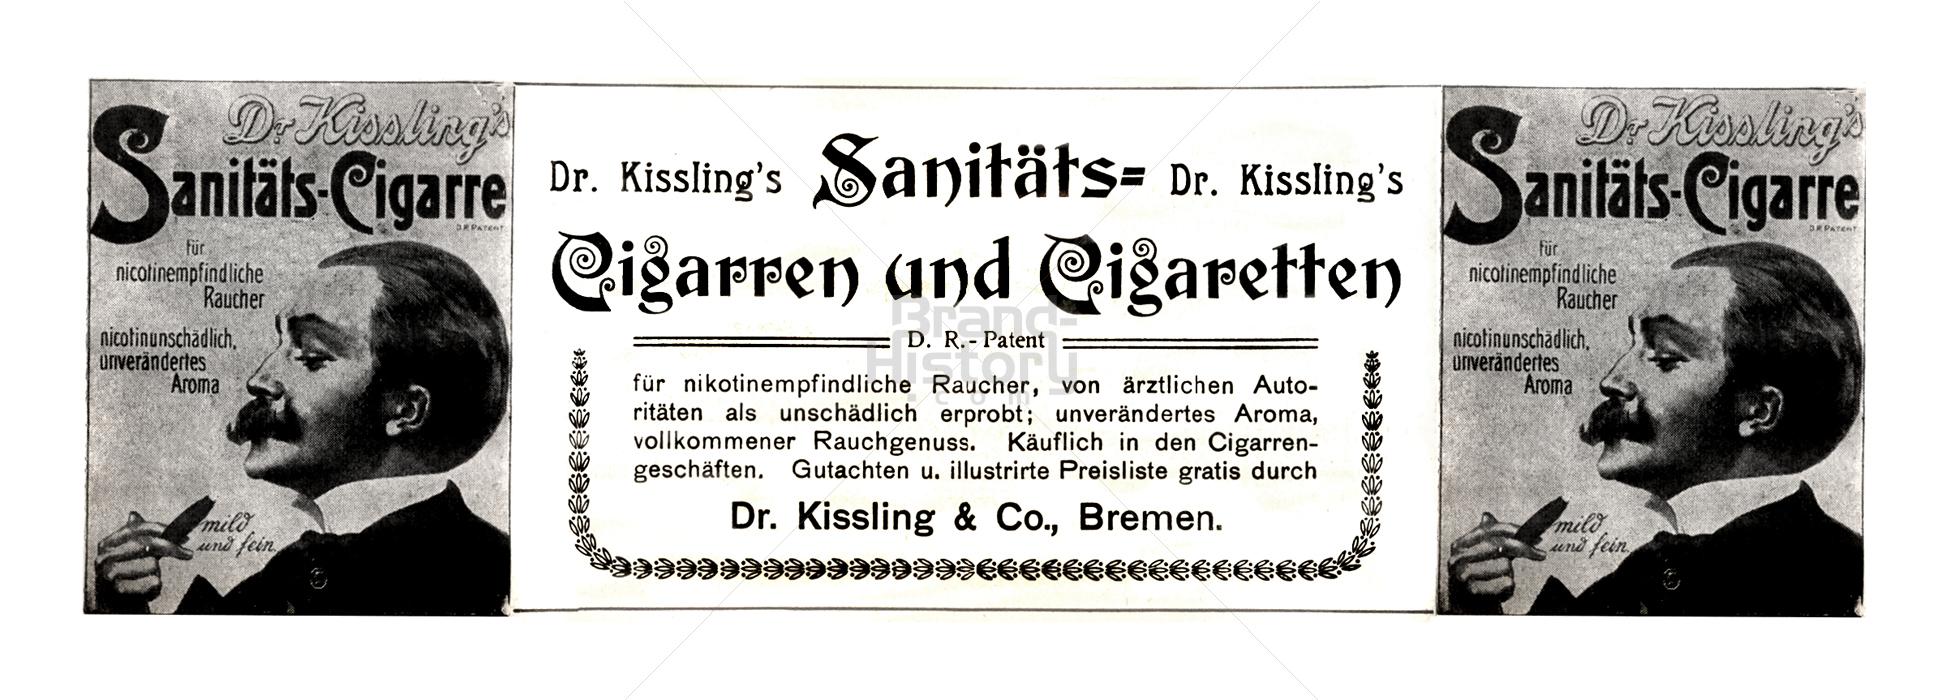 Dr. Kissling's Sanitäts-Cigarre